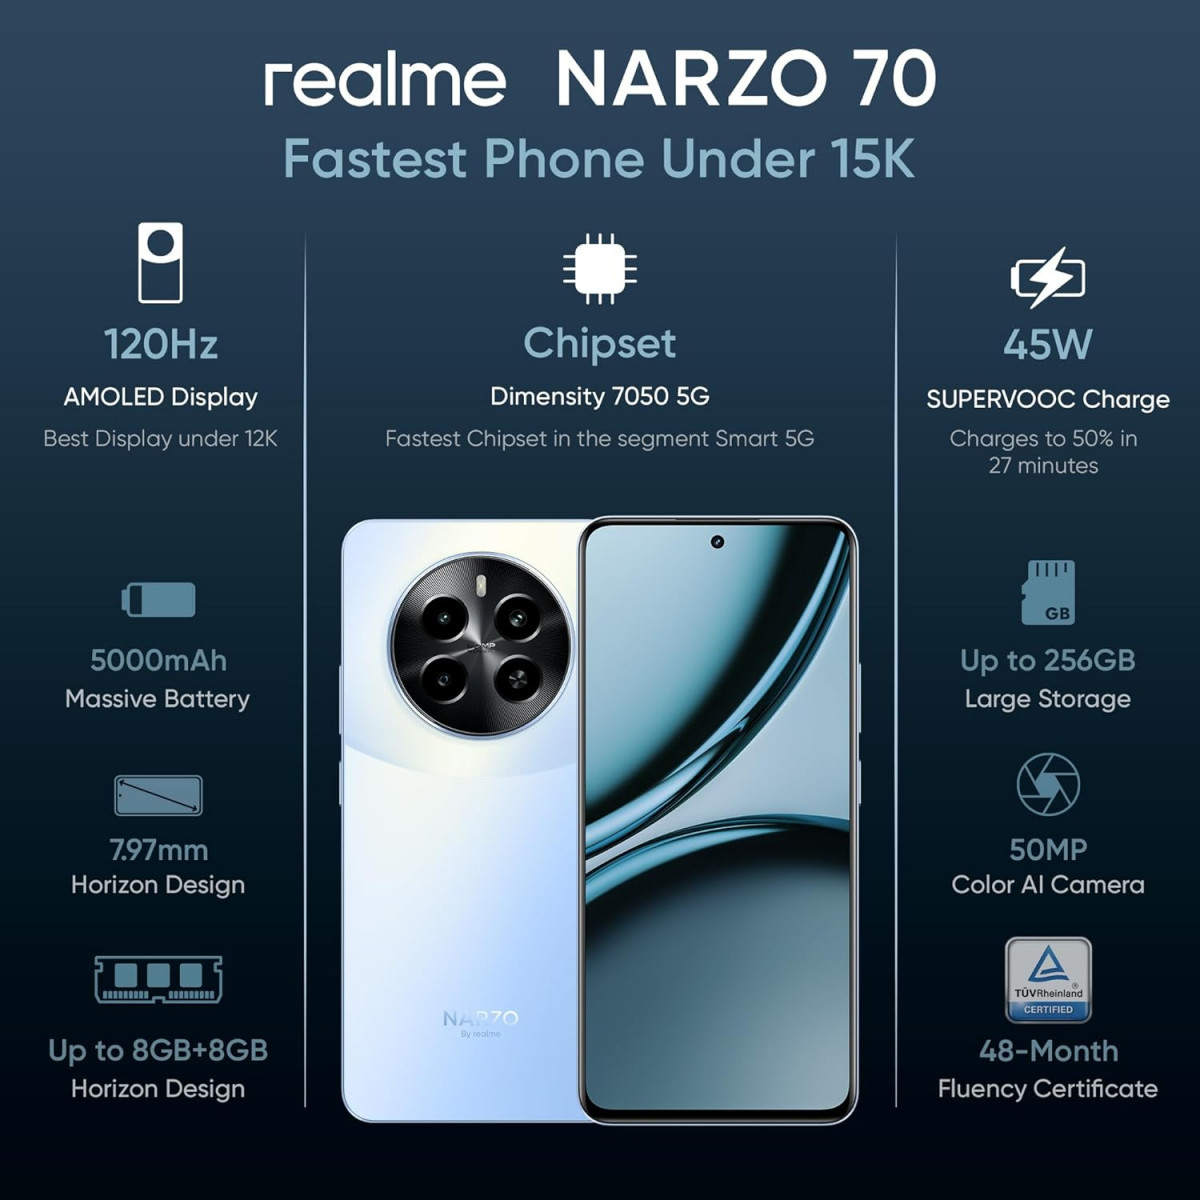 realme NARZO 70 5GIce Blue6GB RAM 128GB Storage  Dimensity 7050 5G Chipset